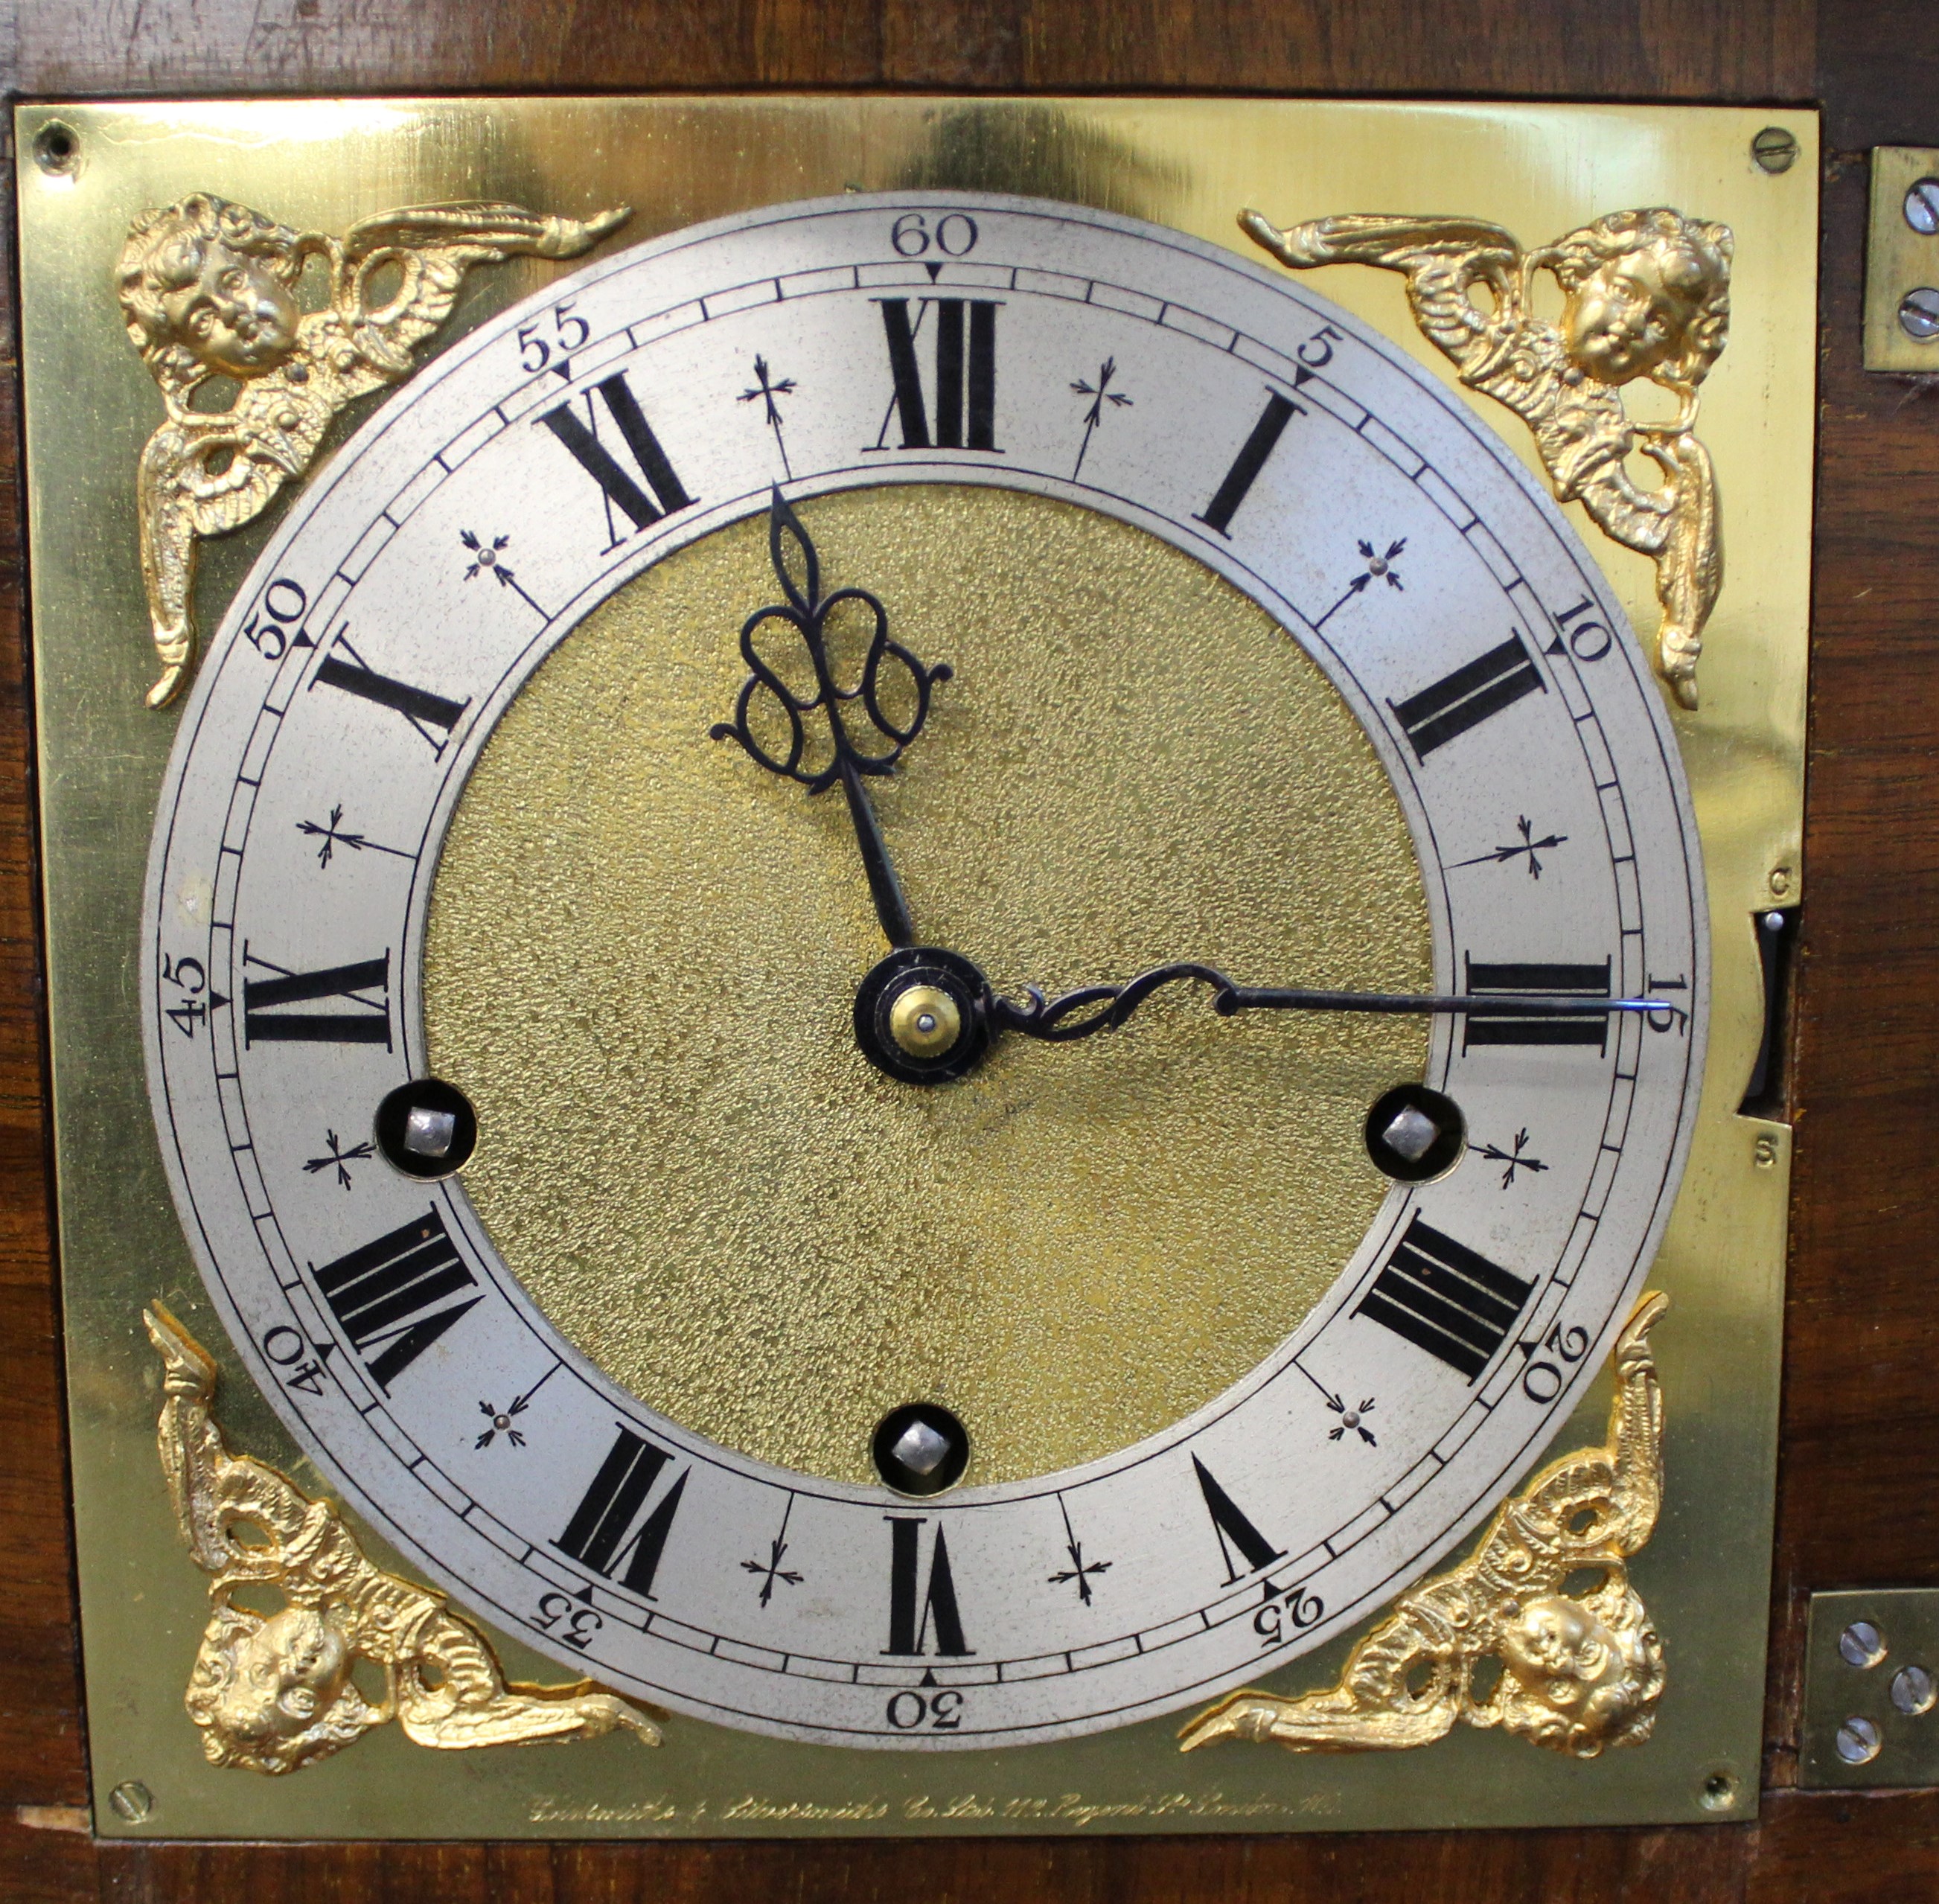 20th century Goldsmiths & Silversmiths Co Ltd ,112 Regent Street, London W1 reproduction table clock - Image 2 of 9